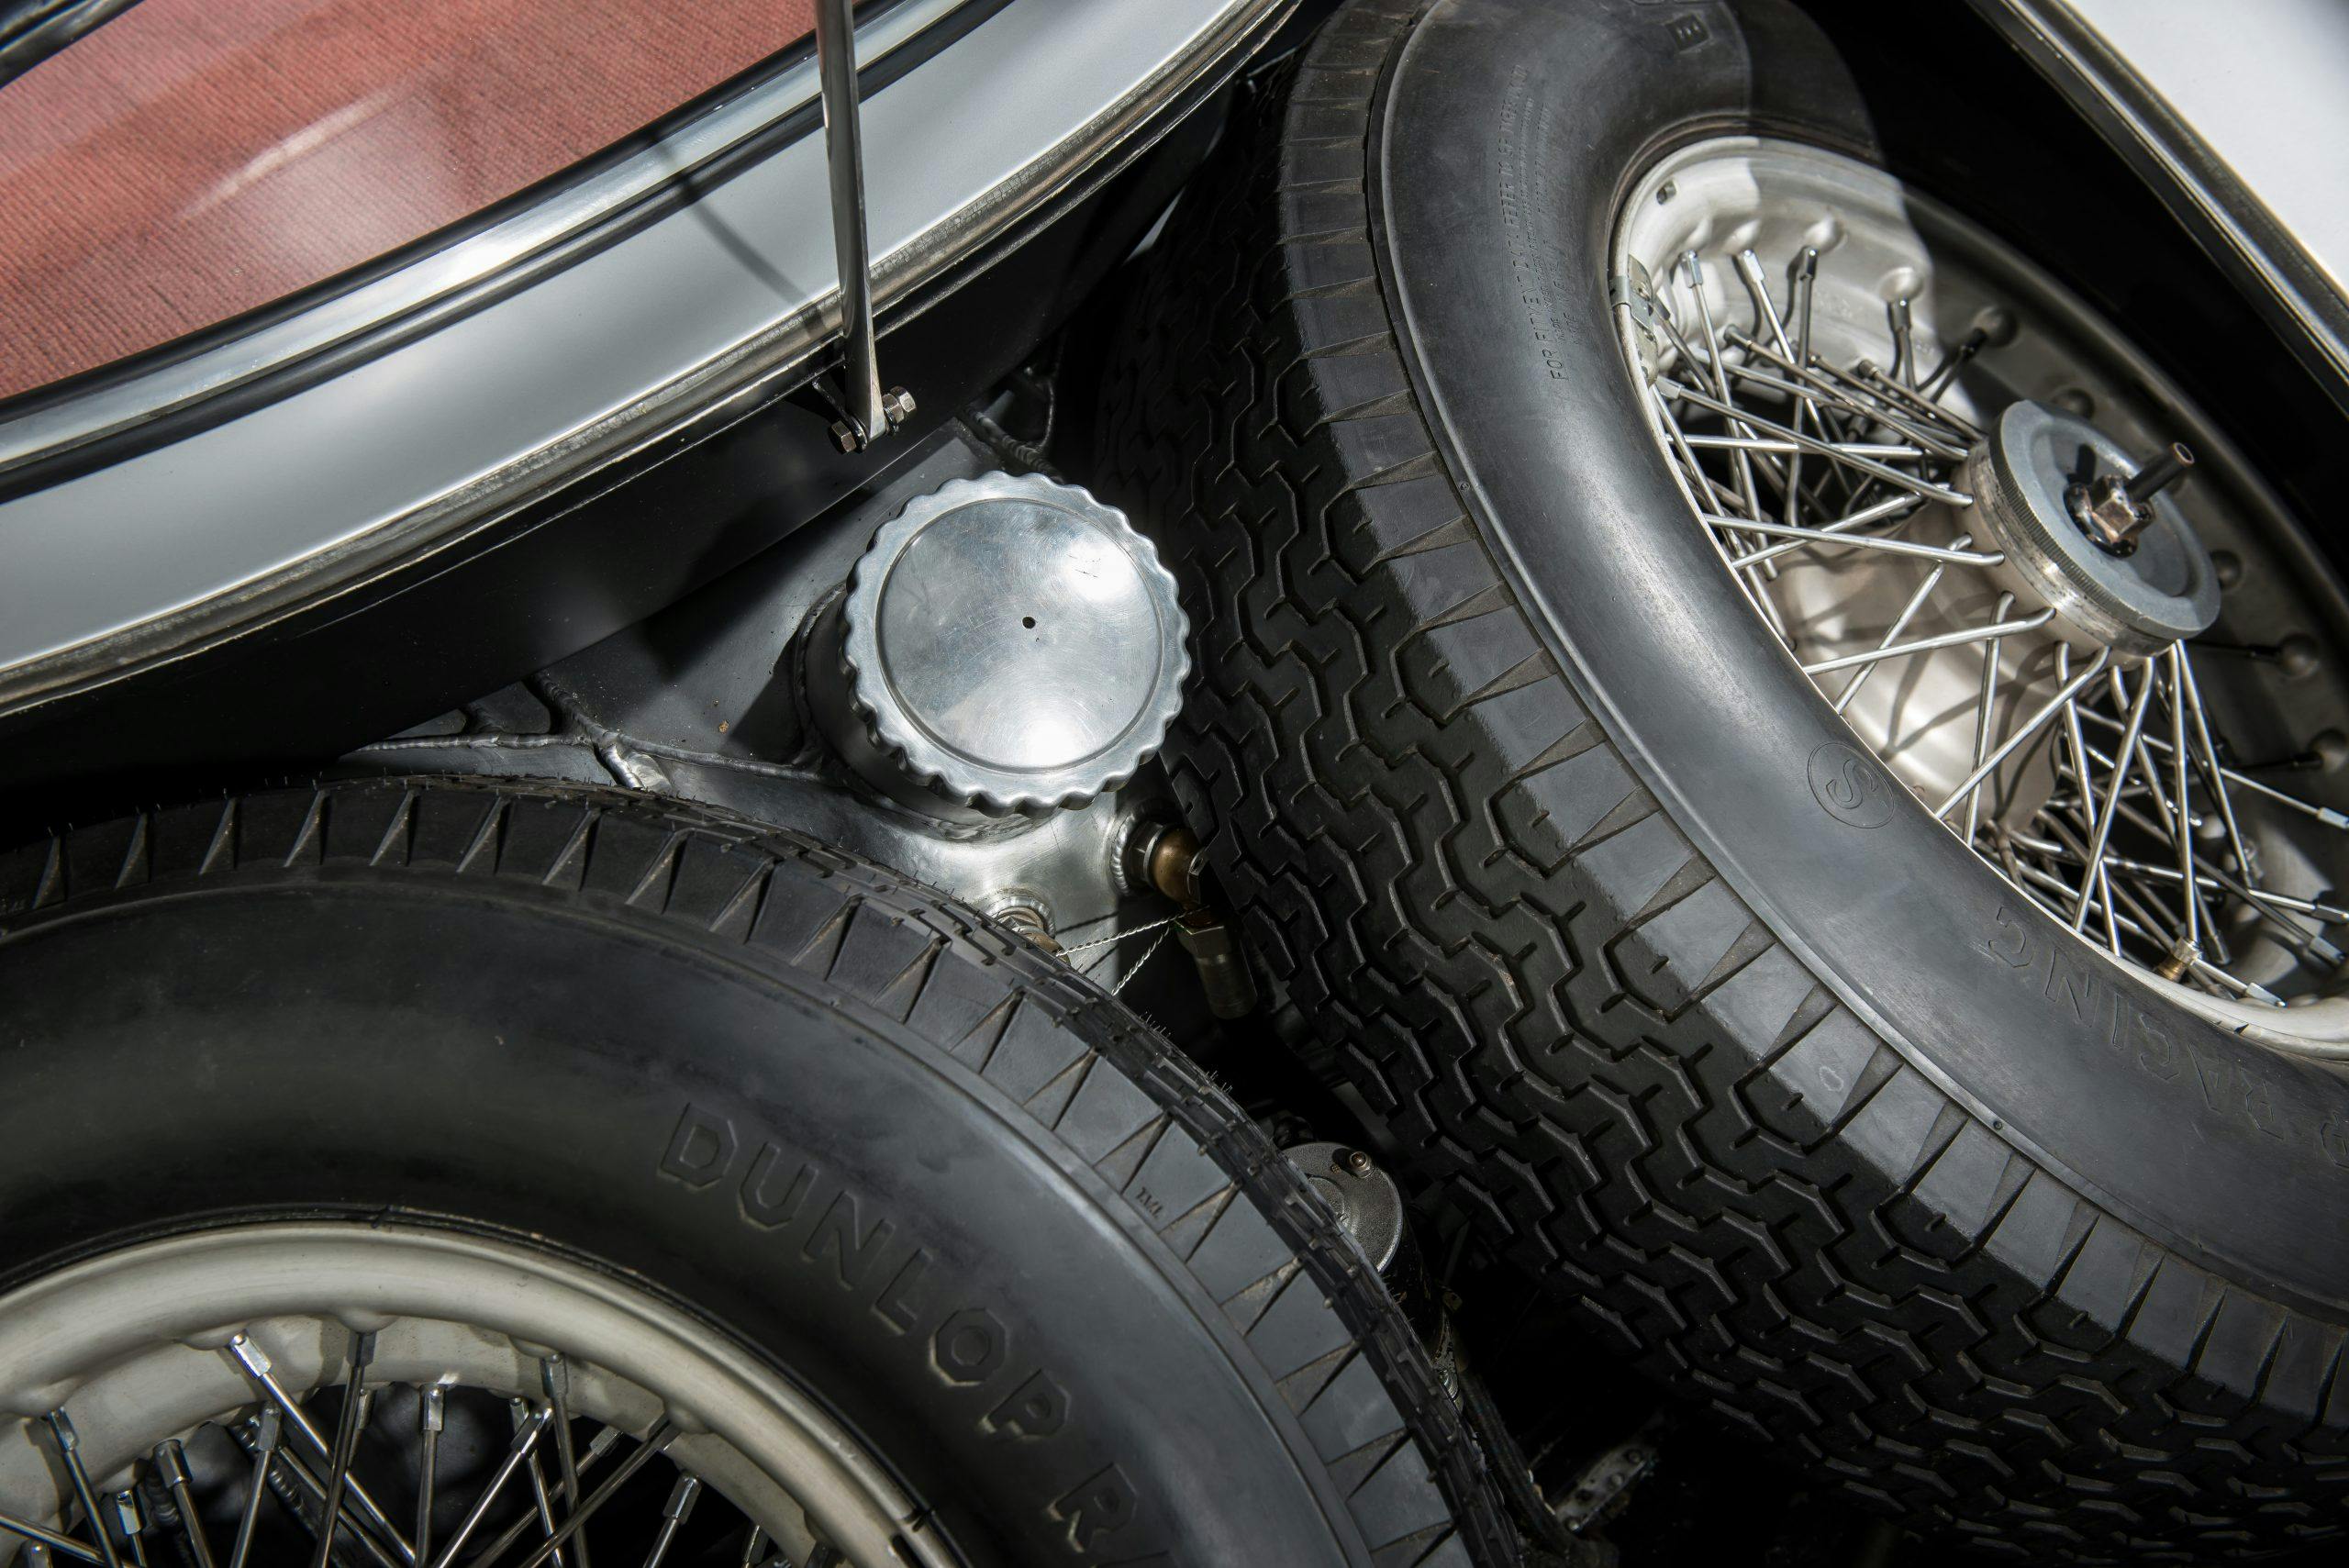 Mercedes-Benz Silver Arrow Uhlenhaut Coupe spare tires